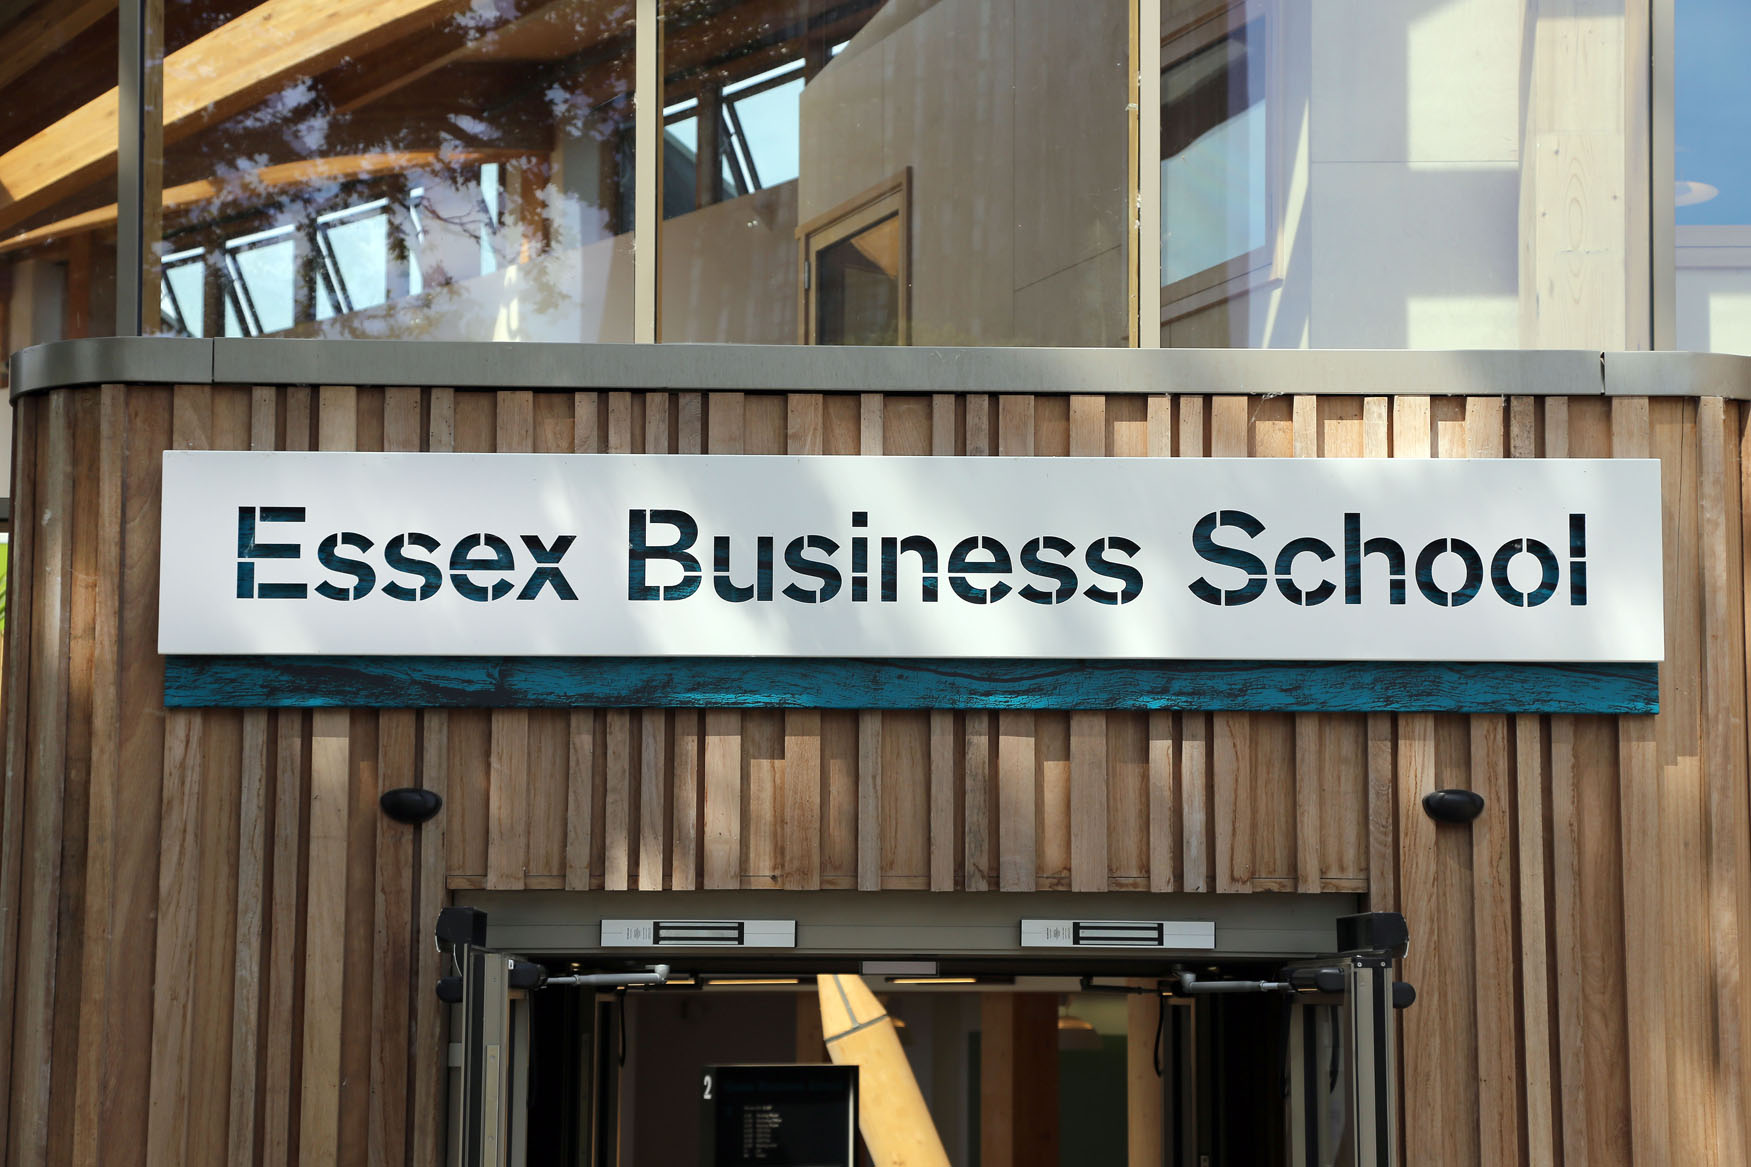 Essex Business School